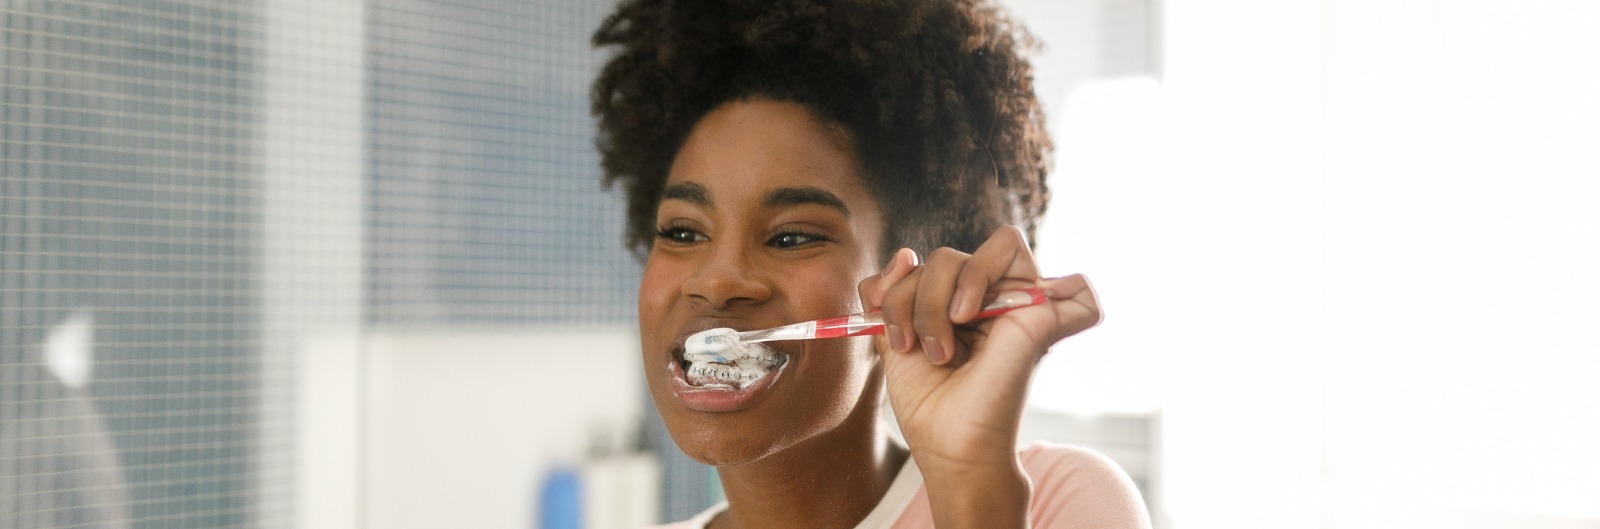 teenage-girl-brushing-her-teeth-picture-1600x529.jpg